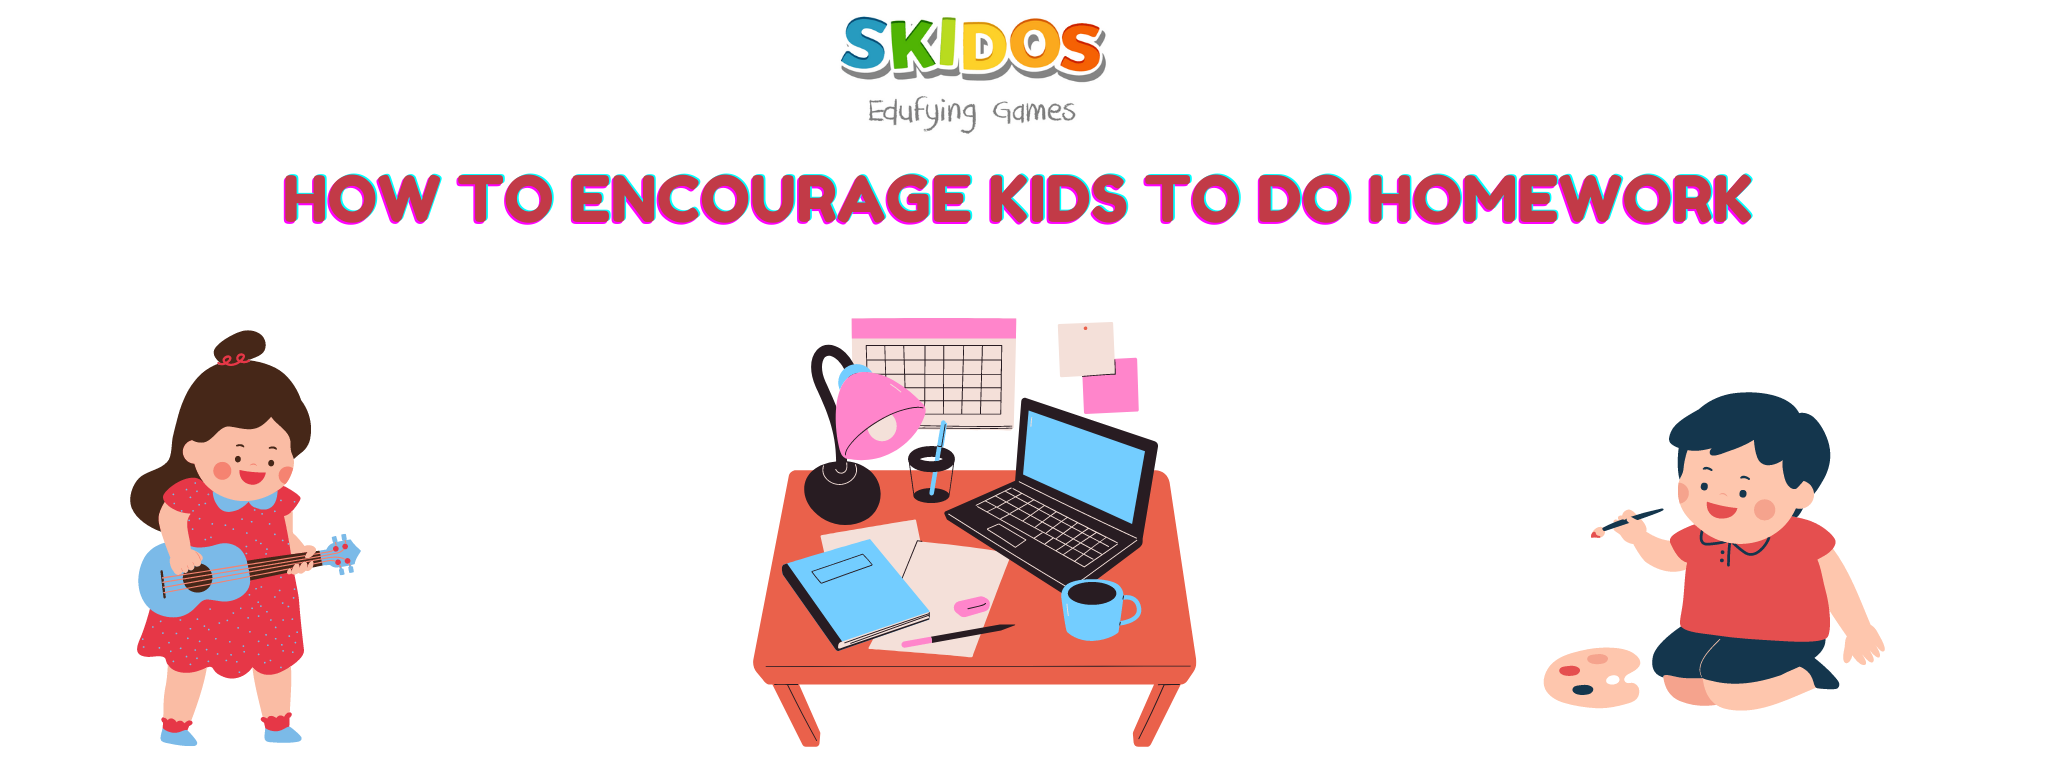 How To Encourage Kids To Do Homework